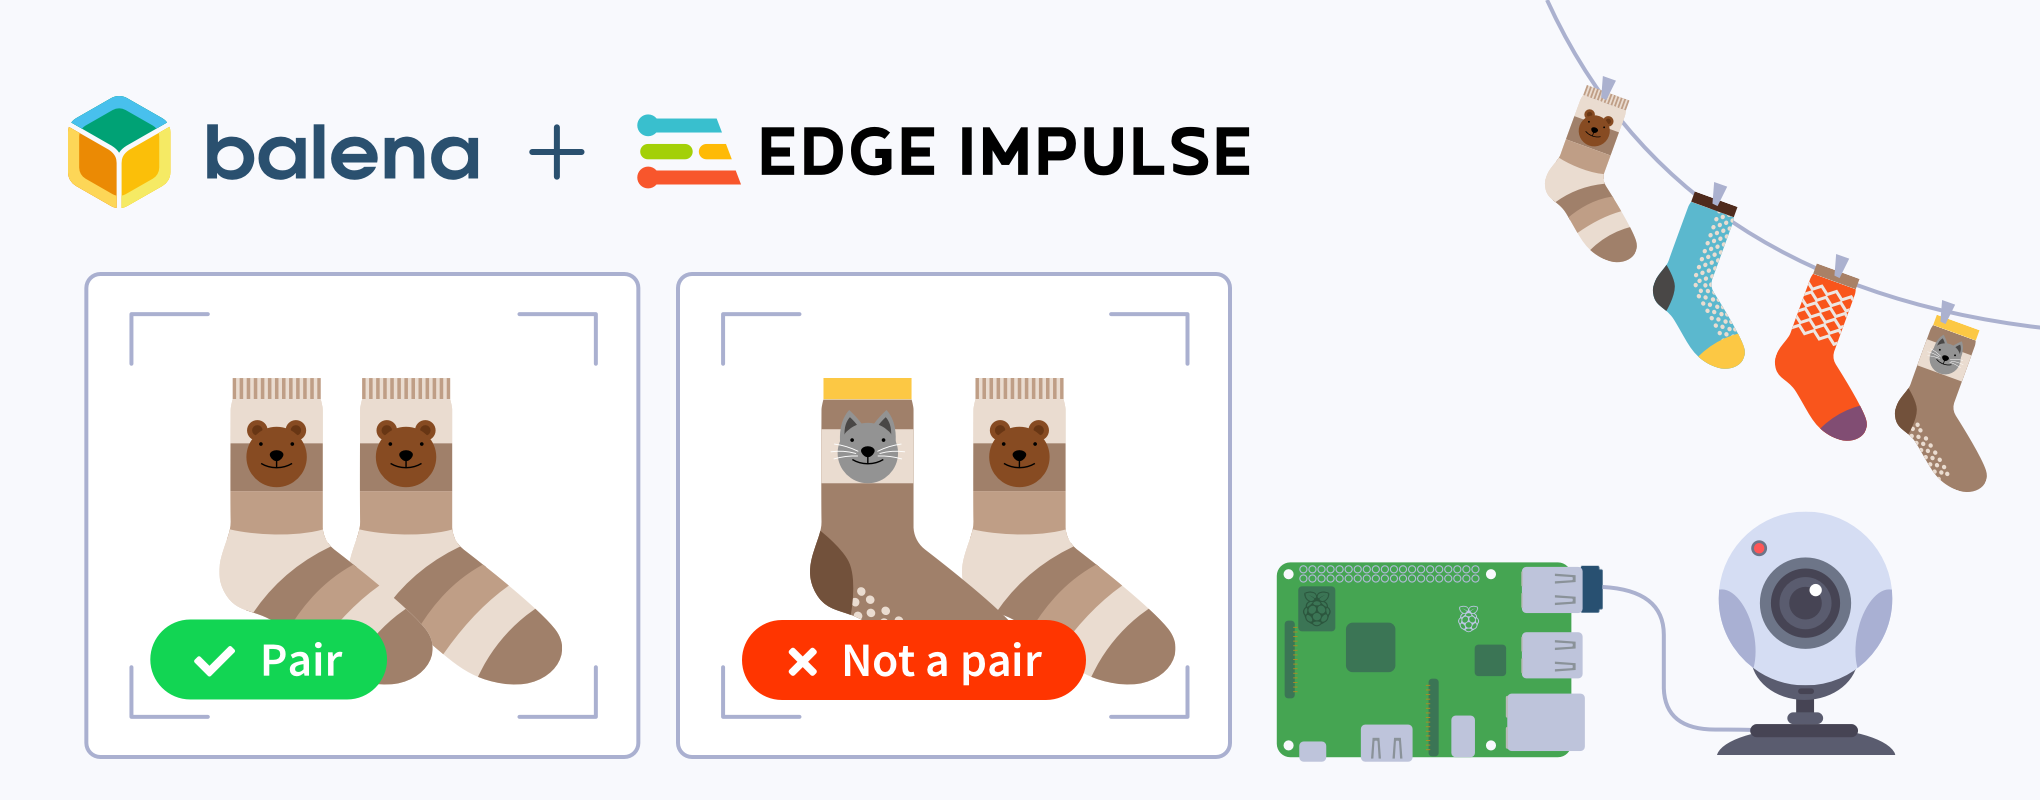 Use AI on a Raspberry Pi with Edge Impulse and balena to determine matching socks